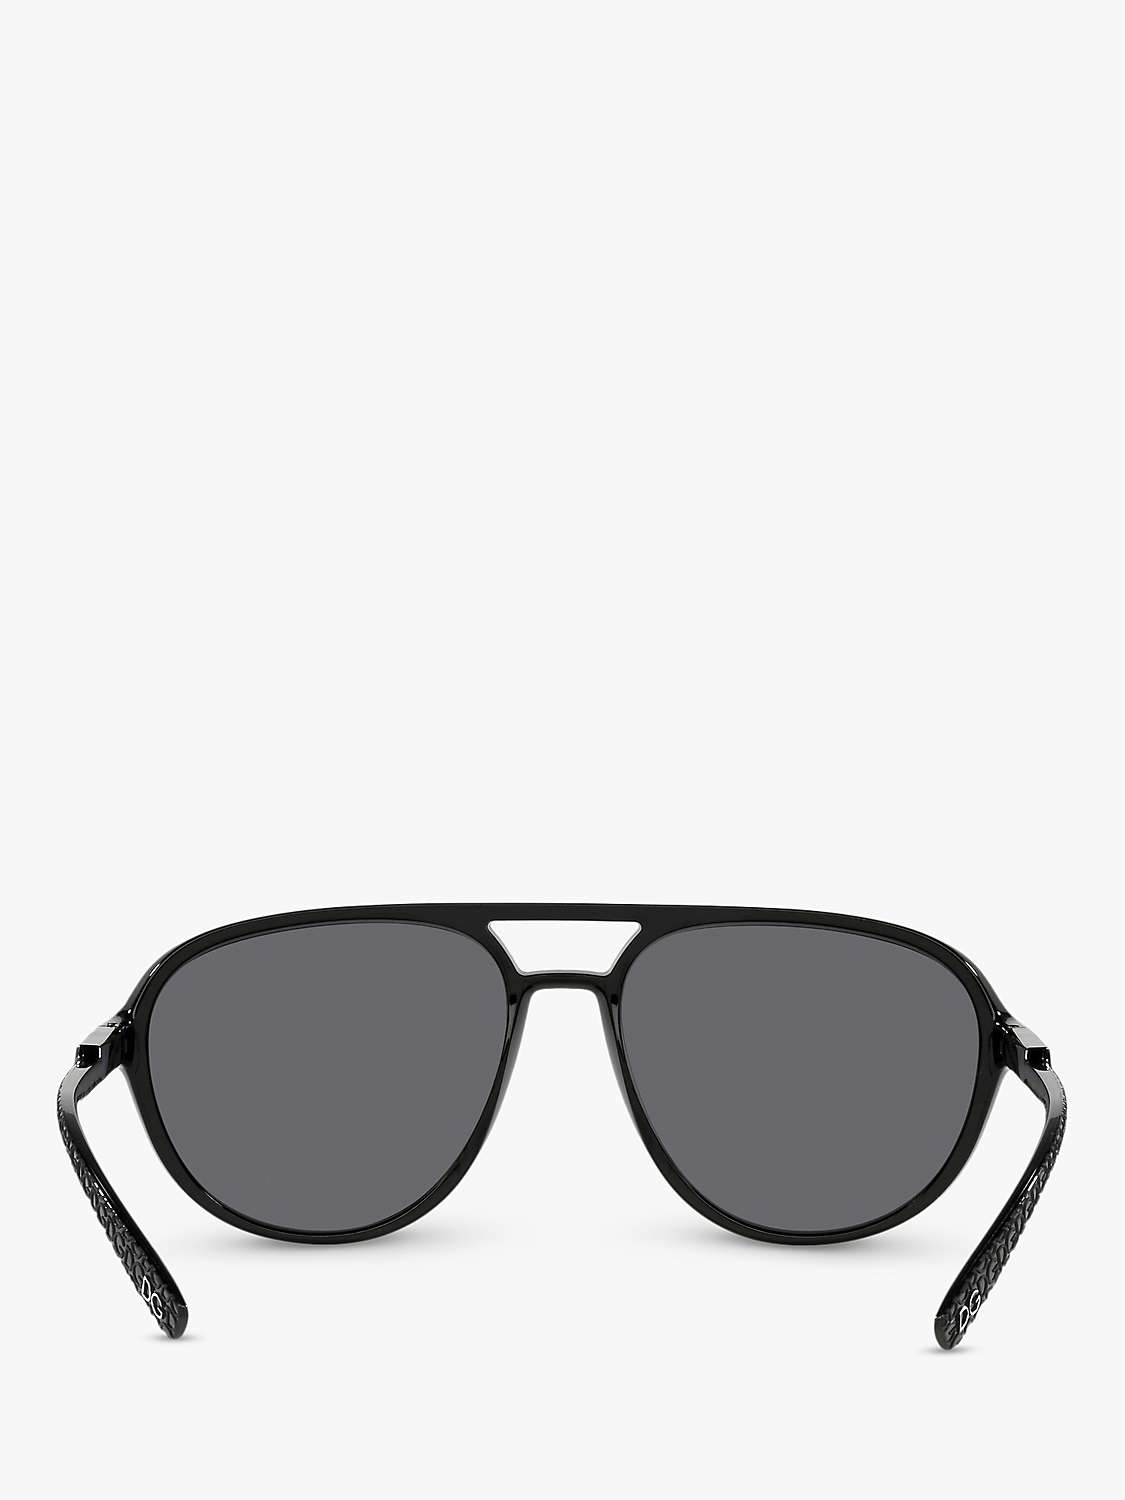 Buy Dolce & Gabbana DG6150 Men's Polarised Aviator Sunglasses, Black/Grey Online at johnlewis.com